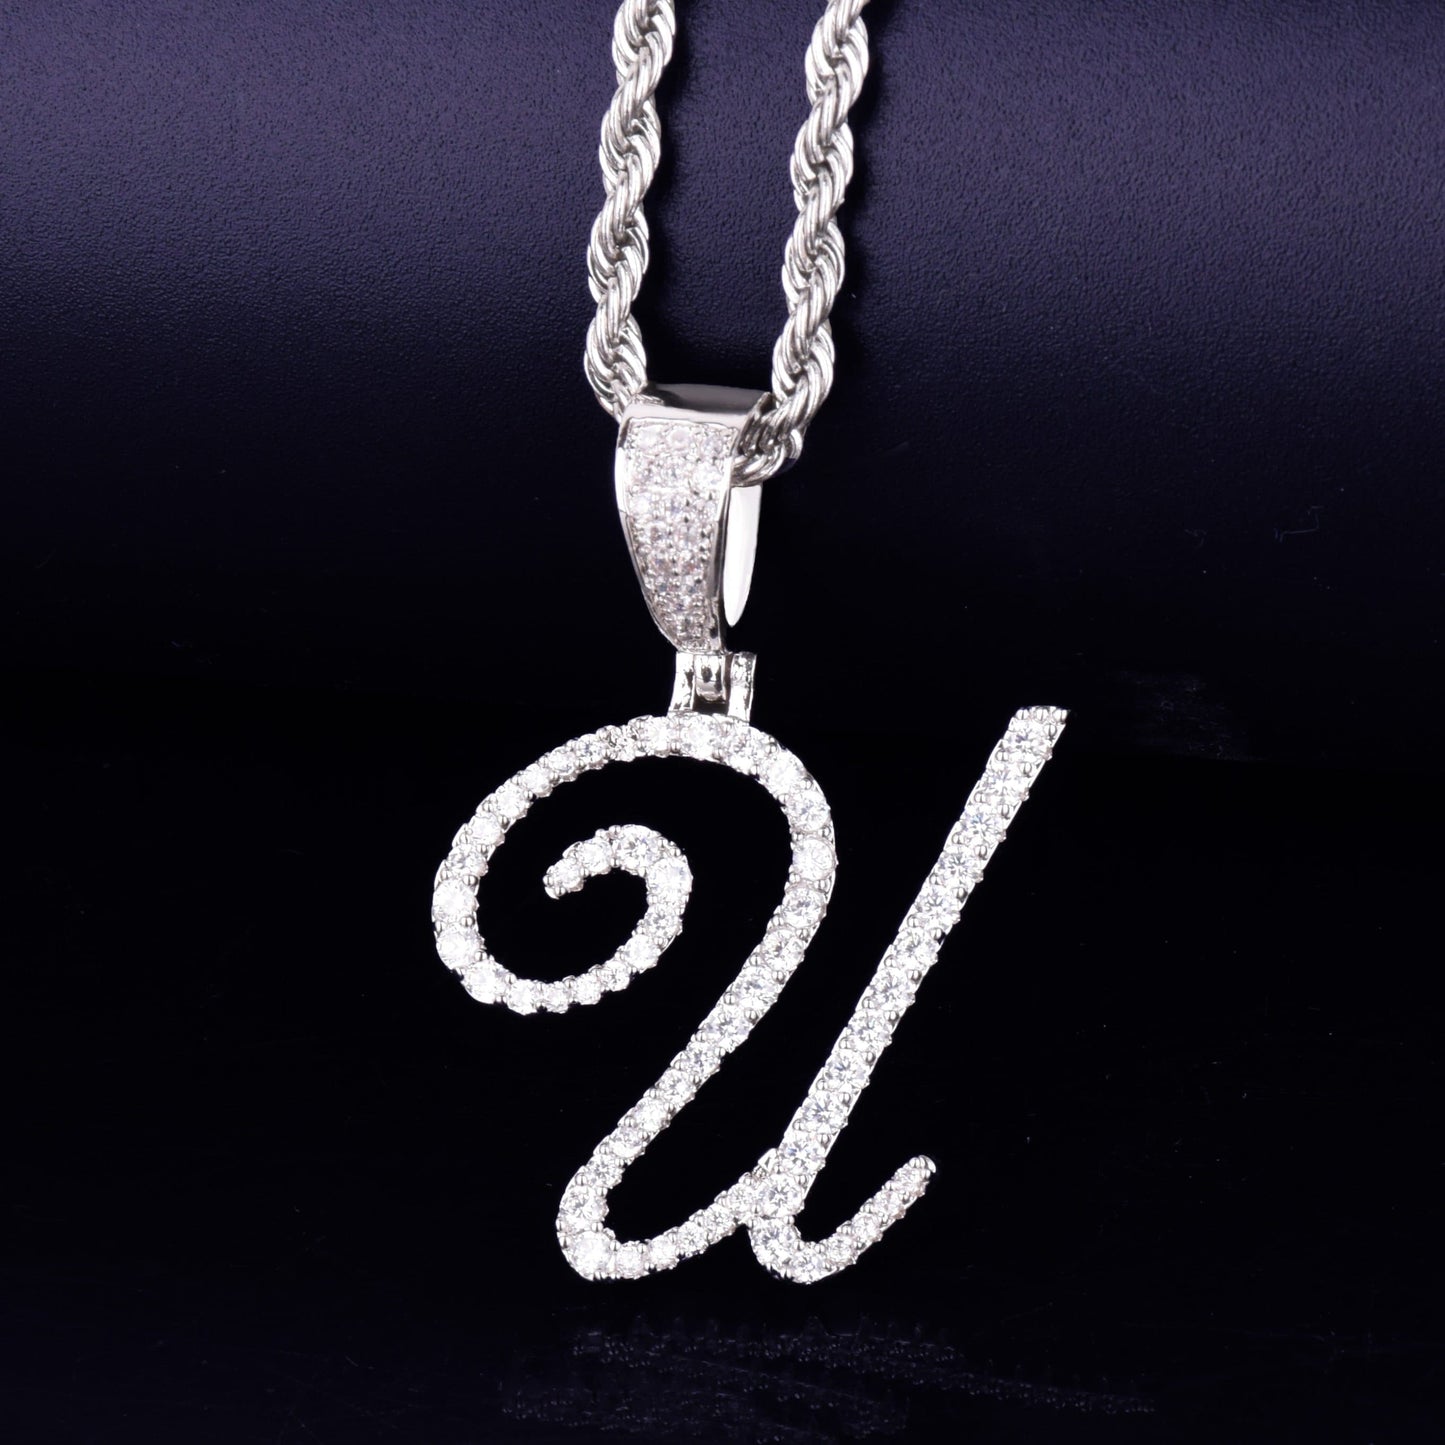 Gold Color Cursive Letter Pendant Necklaces Charm Men's Women Fashion Hip Hop Rock Jewelry with Rope Chain